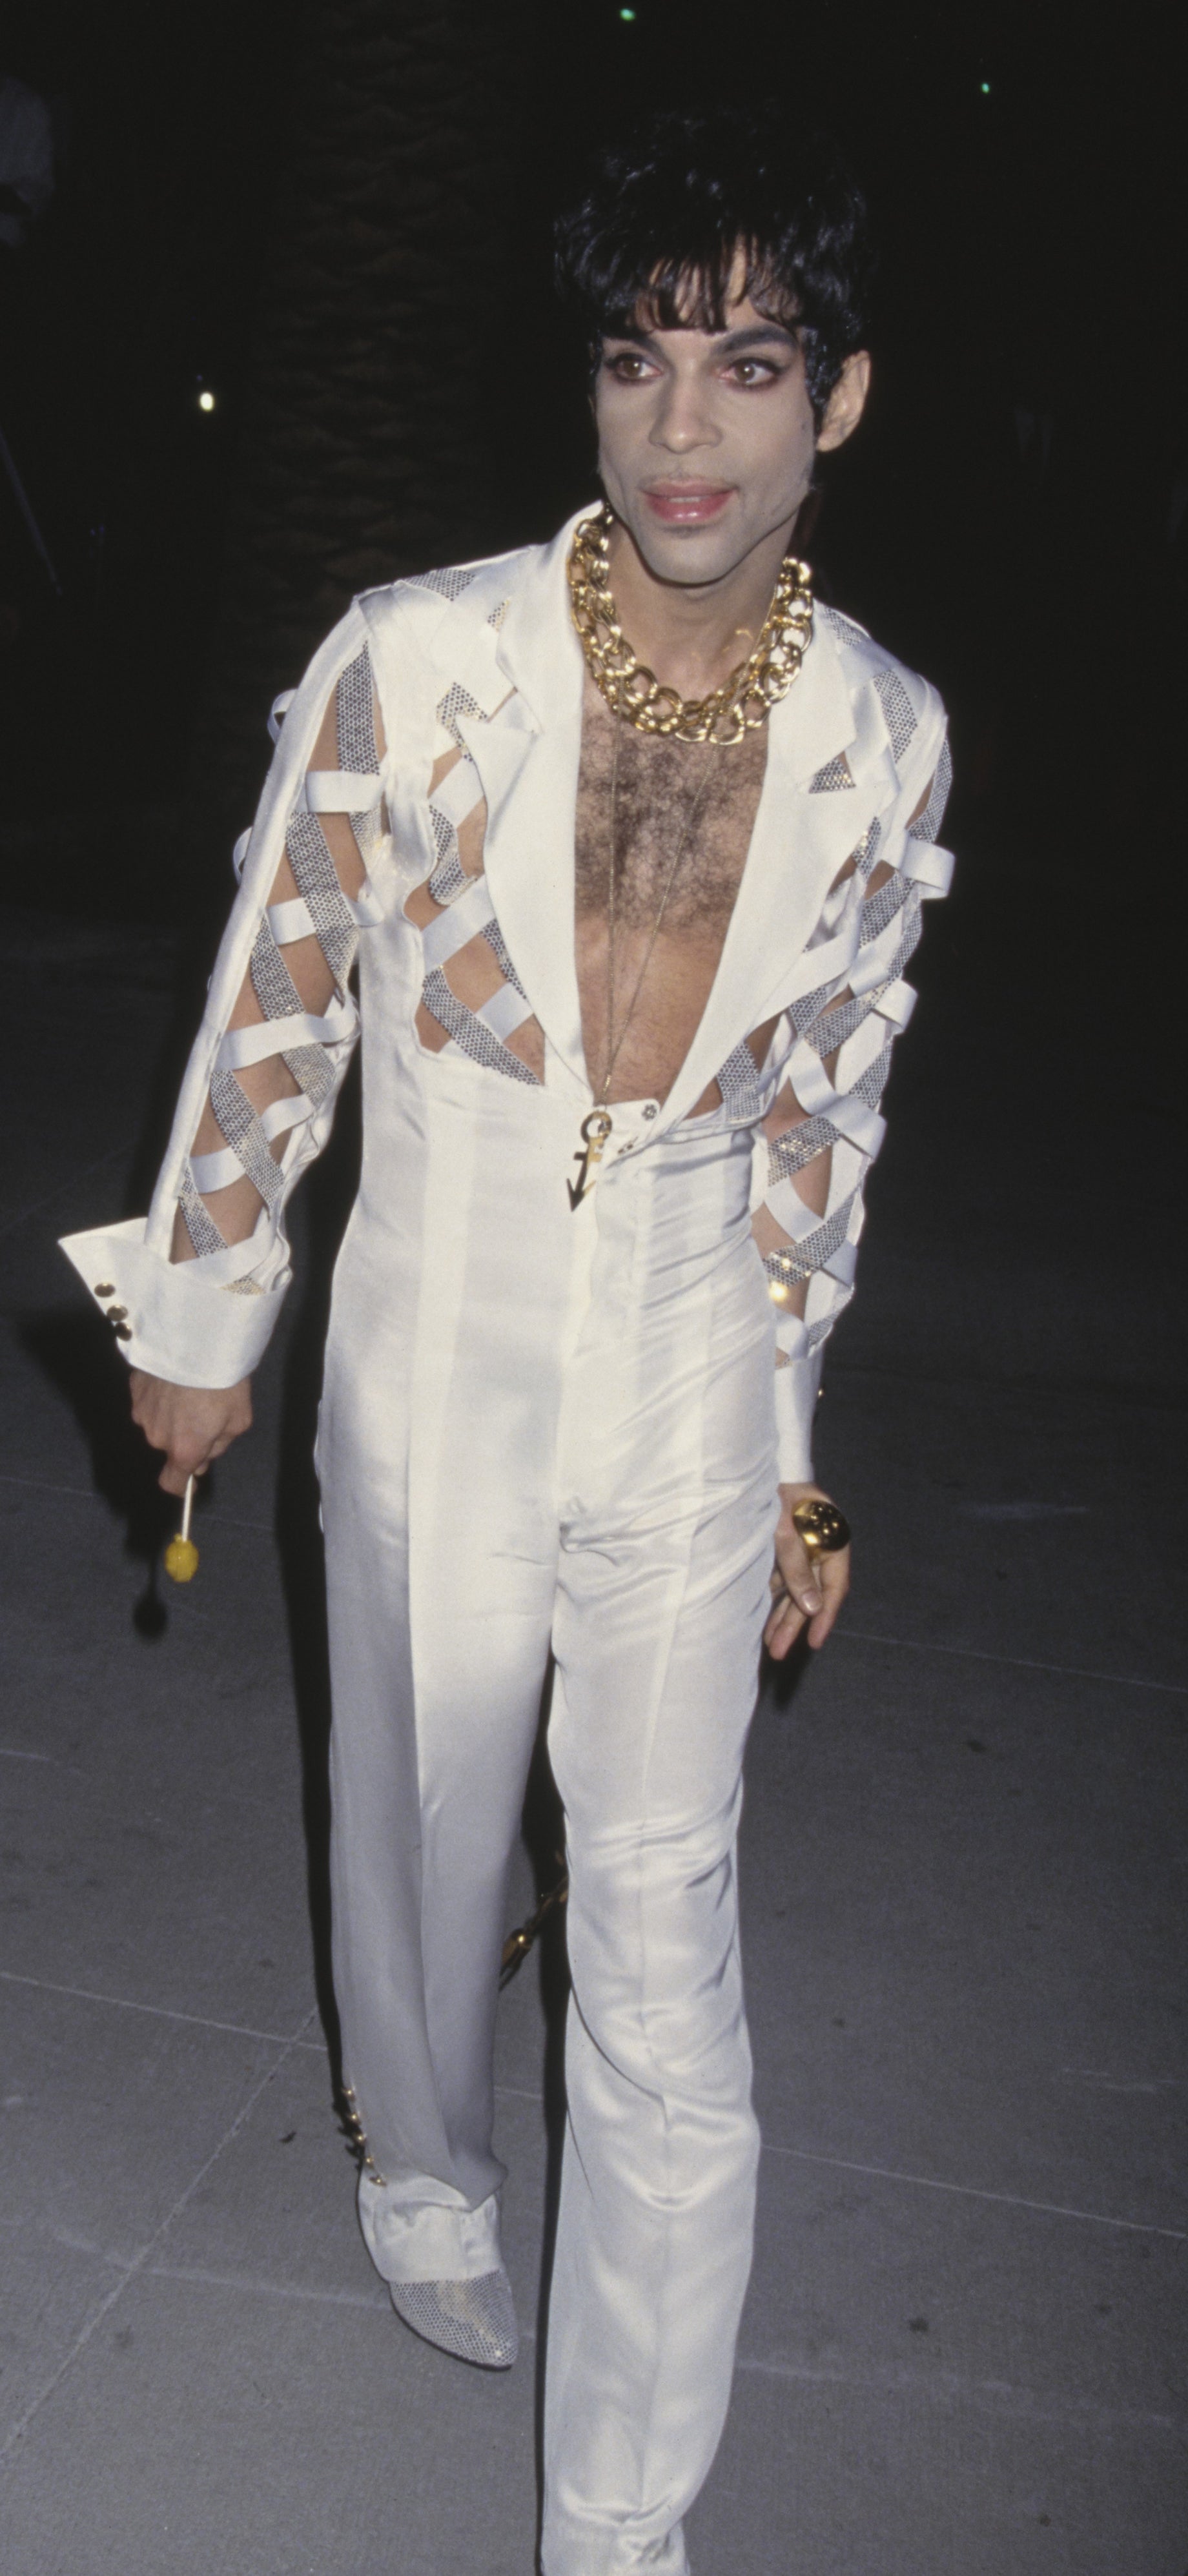 Prince attends 1st Vanity Fair Oscar Party